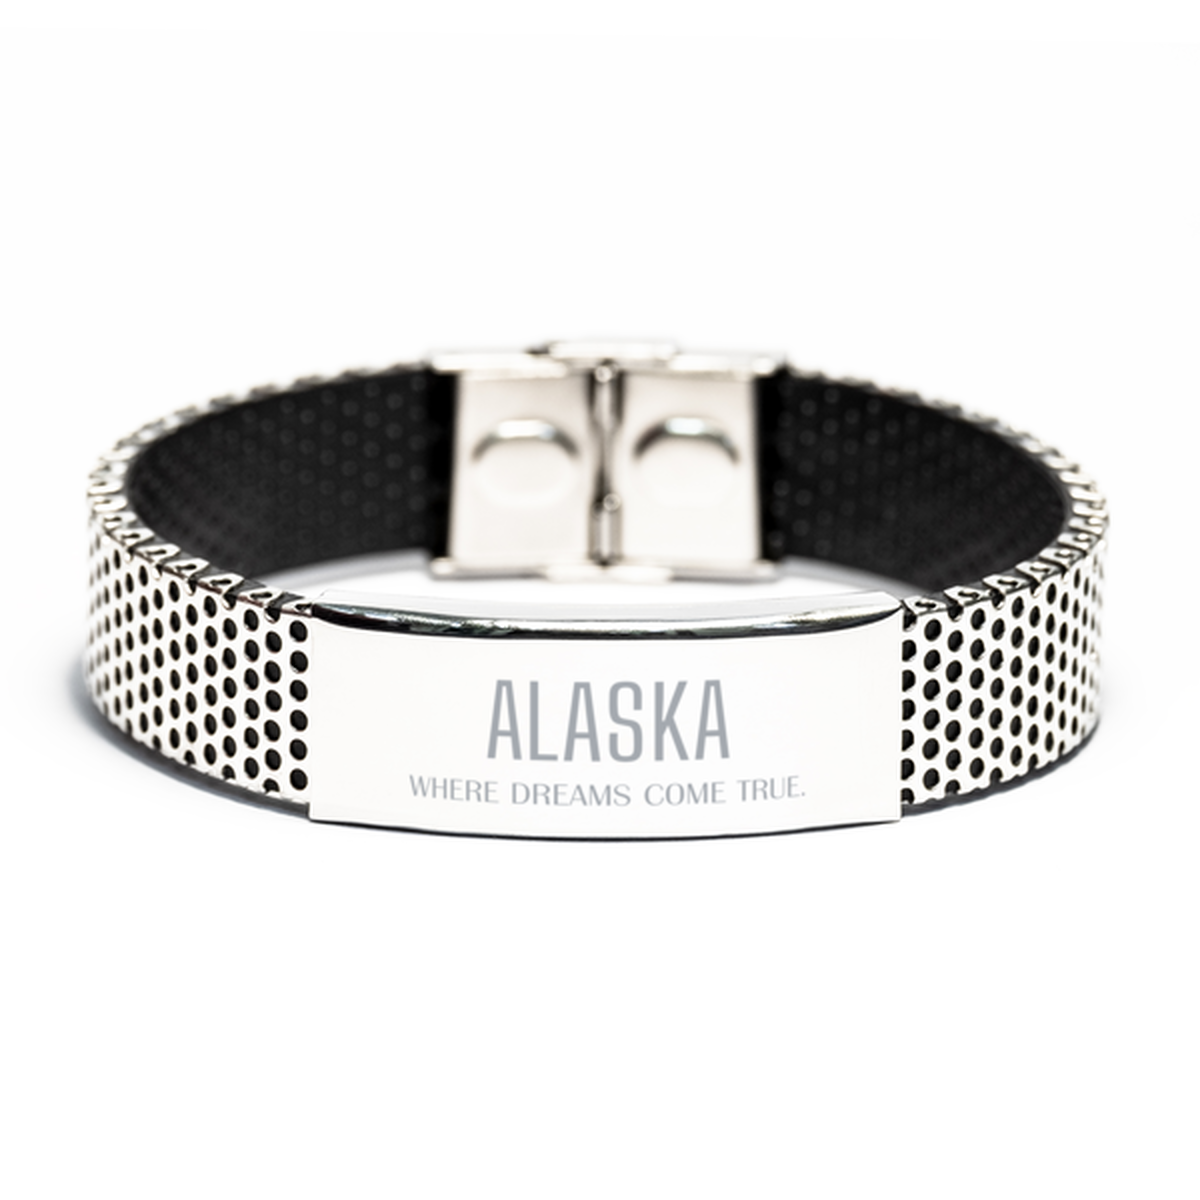 Love Alaska State Stainless Steel Bracelet, Alaska Where dreams come true, Birthday Inspirational Gifts For Alaska Men, Women, Friends